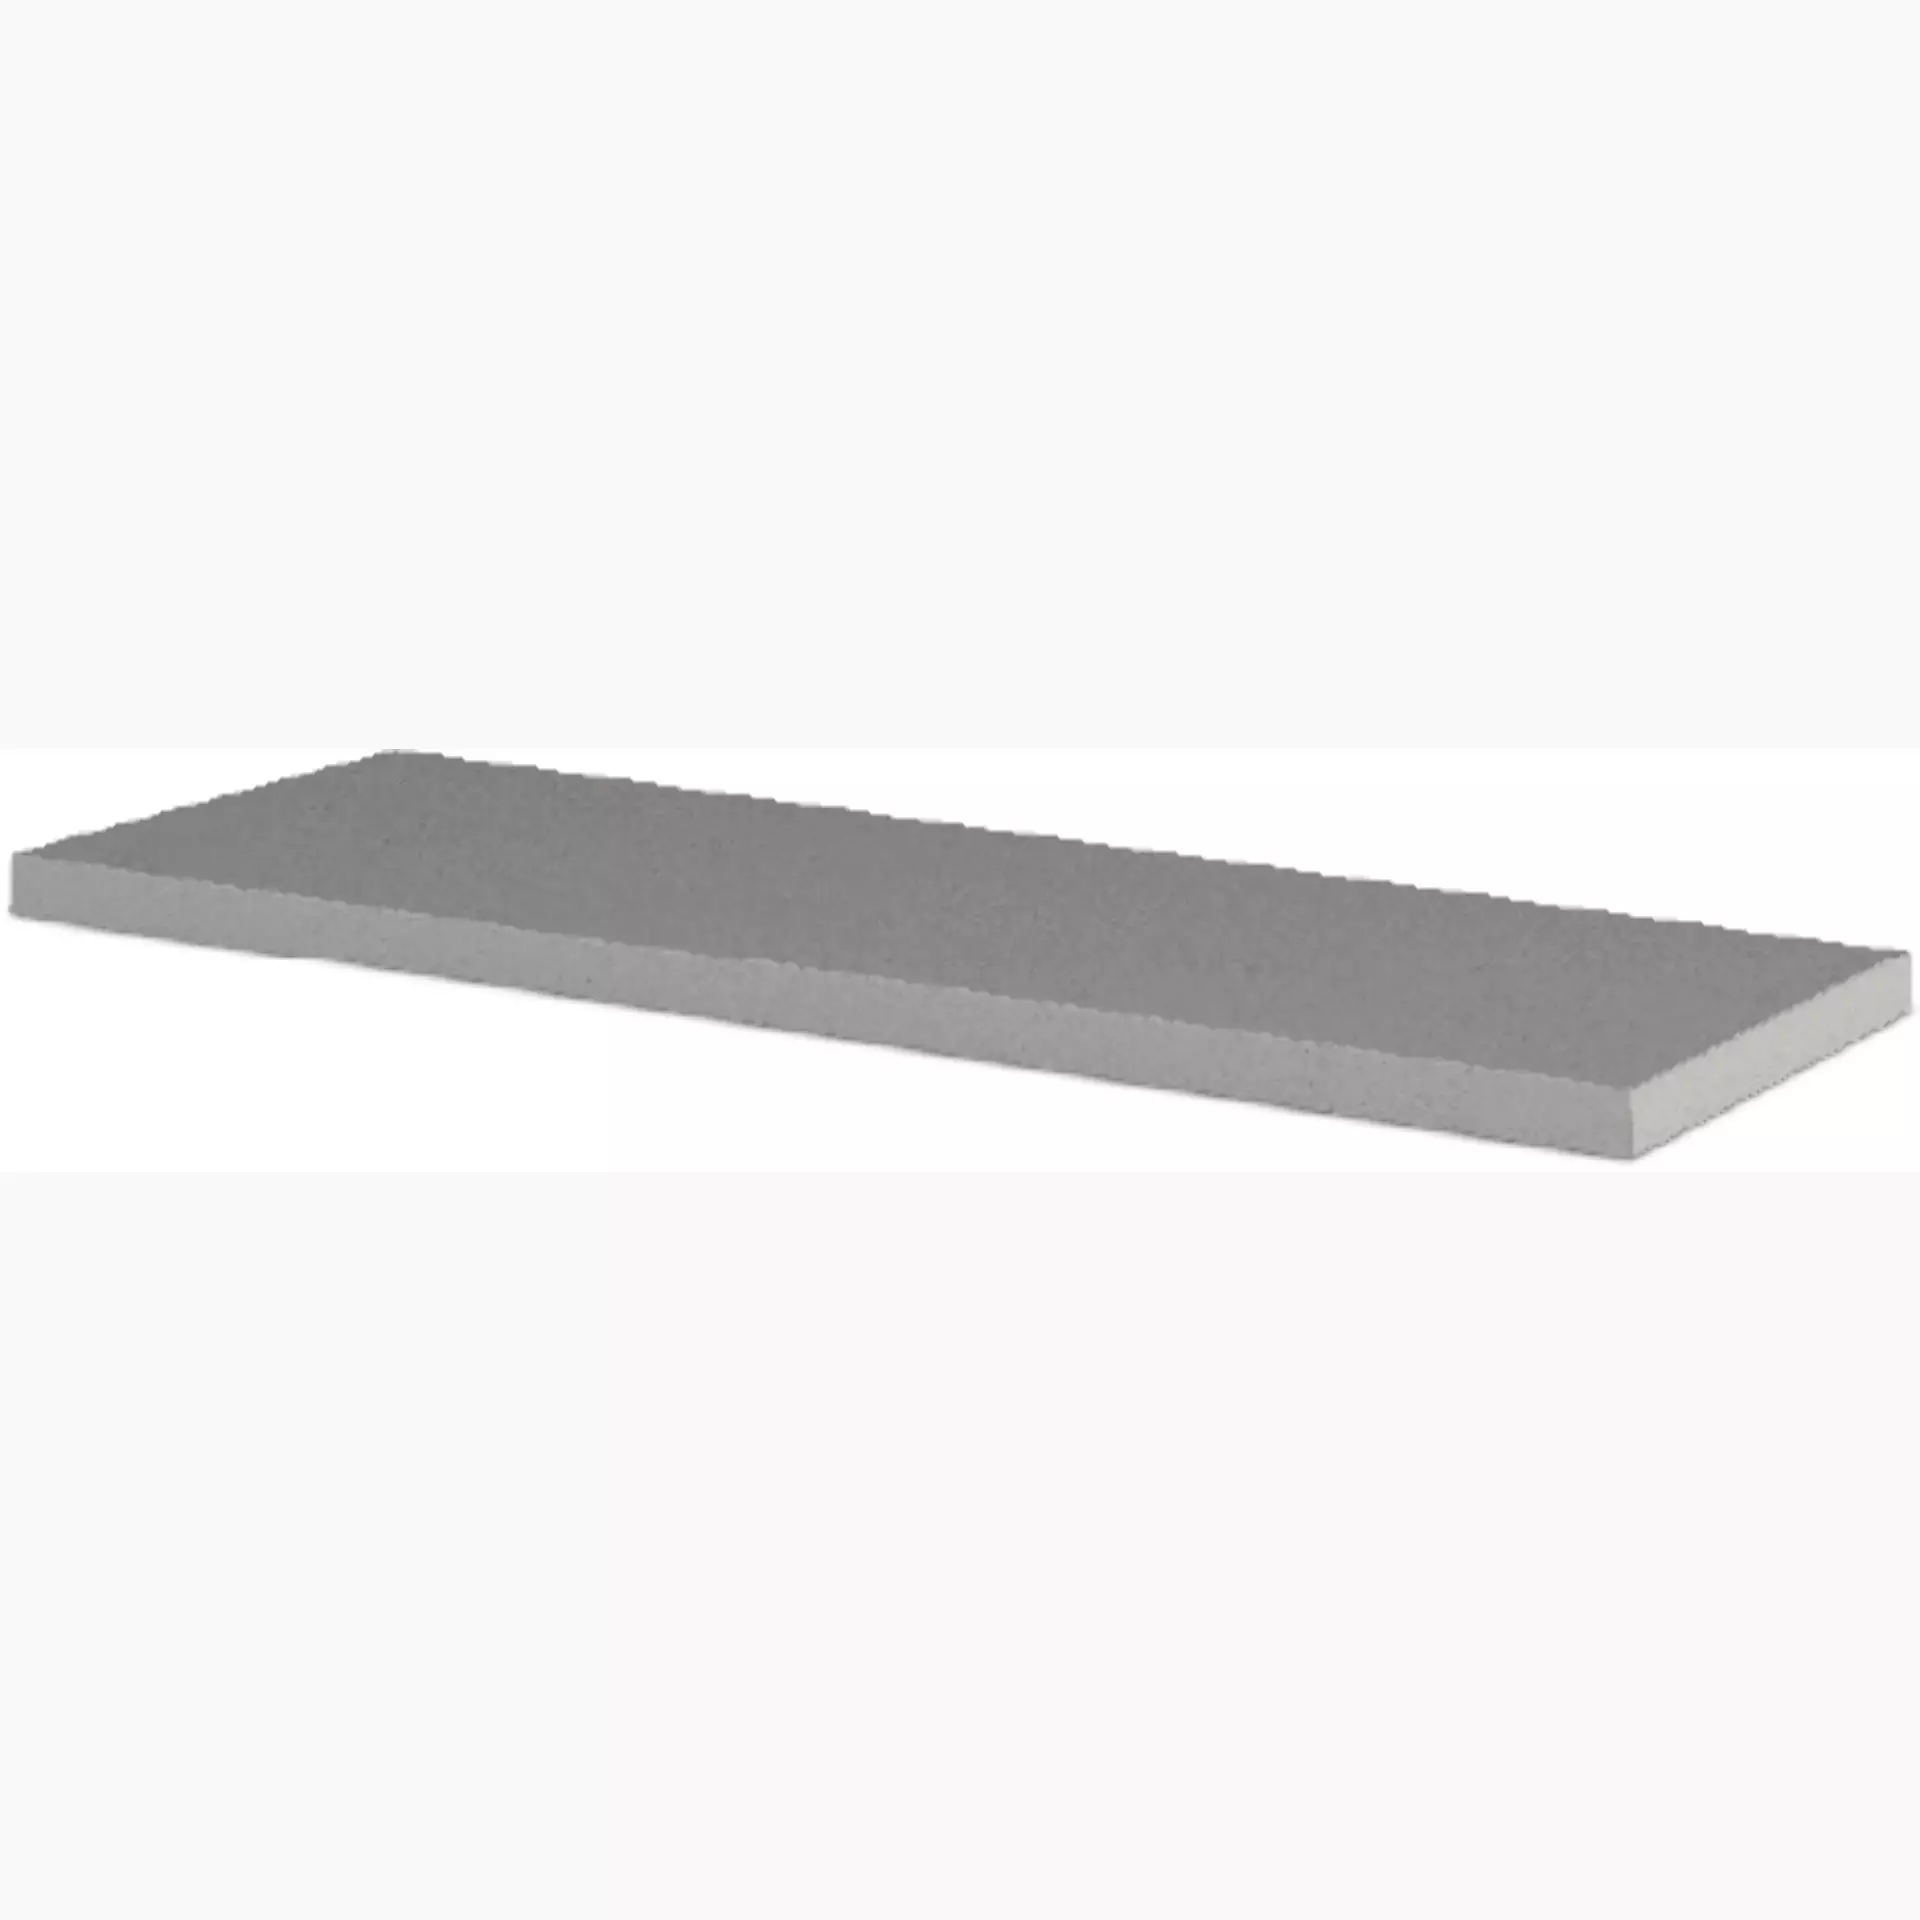 Sichenia Amboise Grigio Soft Grip Stair plate Corner Plate Costa Retta Right 0192853 33x120cm rectified 10mm